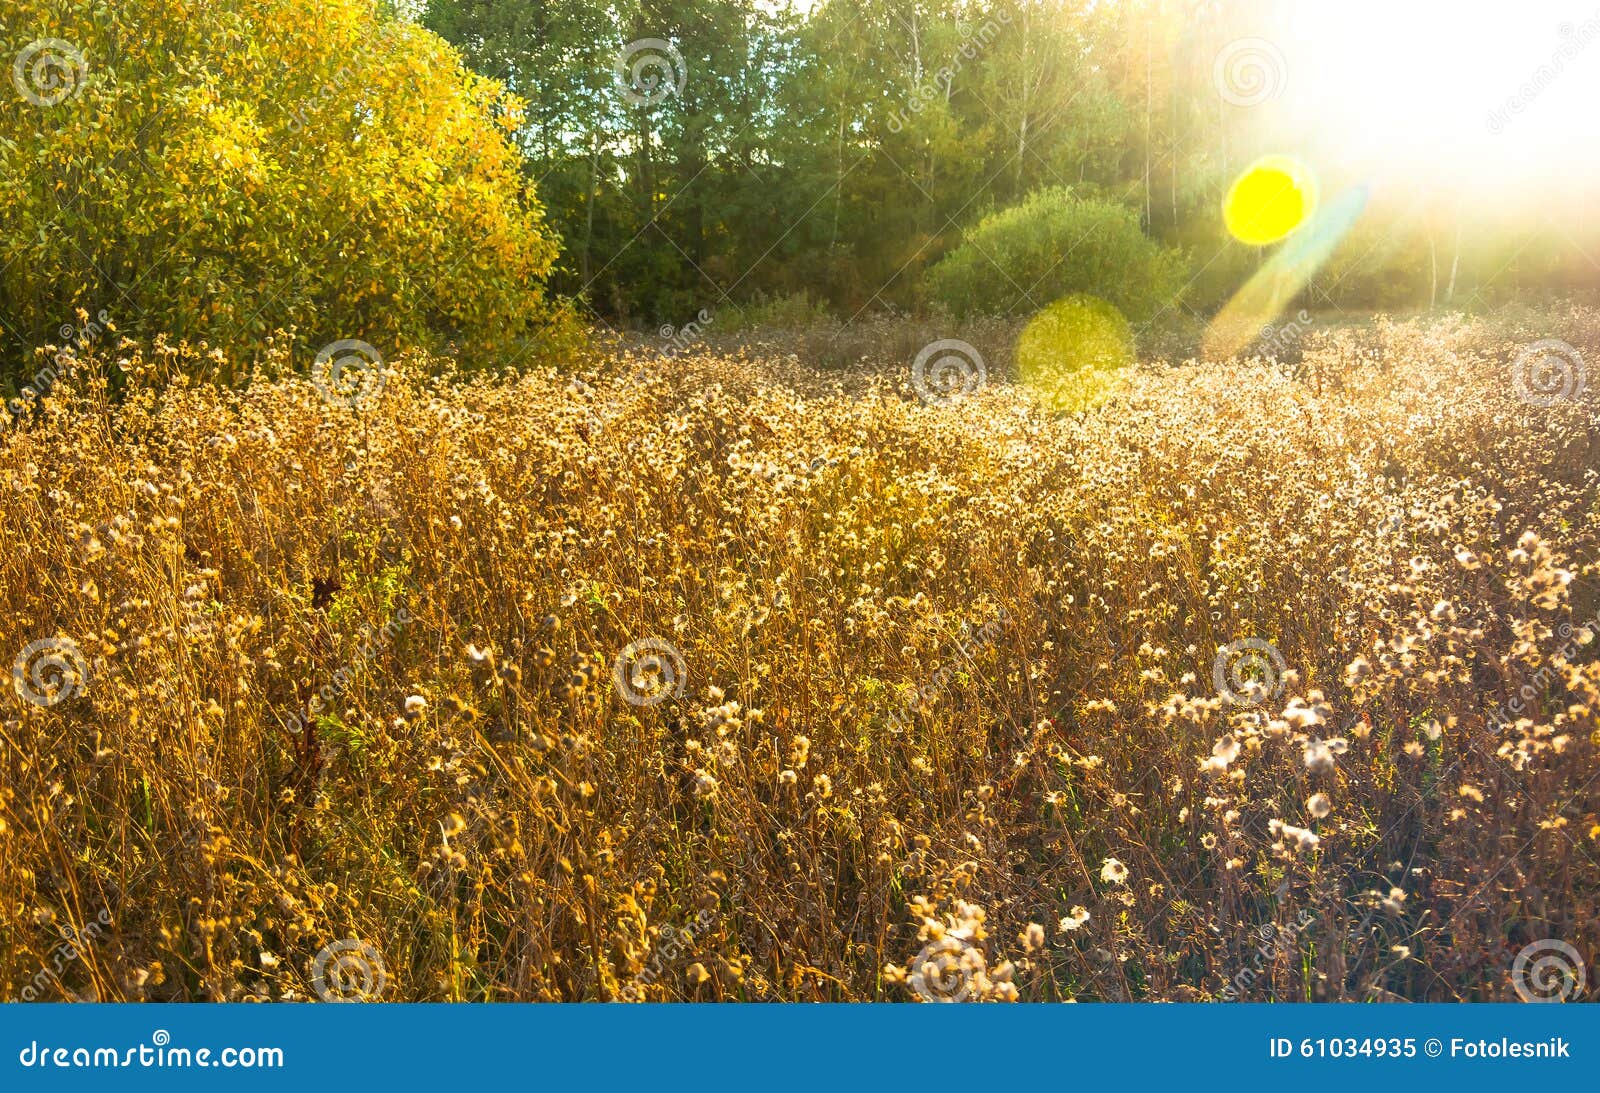 Golden Grass Field at Sunset Stock Image - Image of season, morning